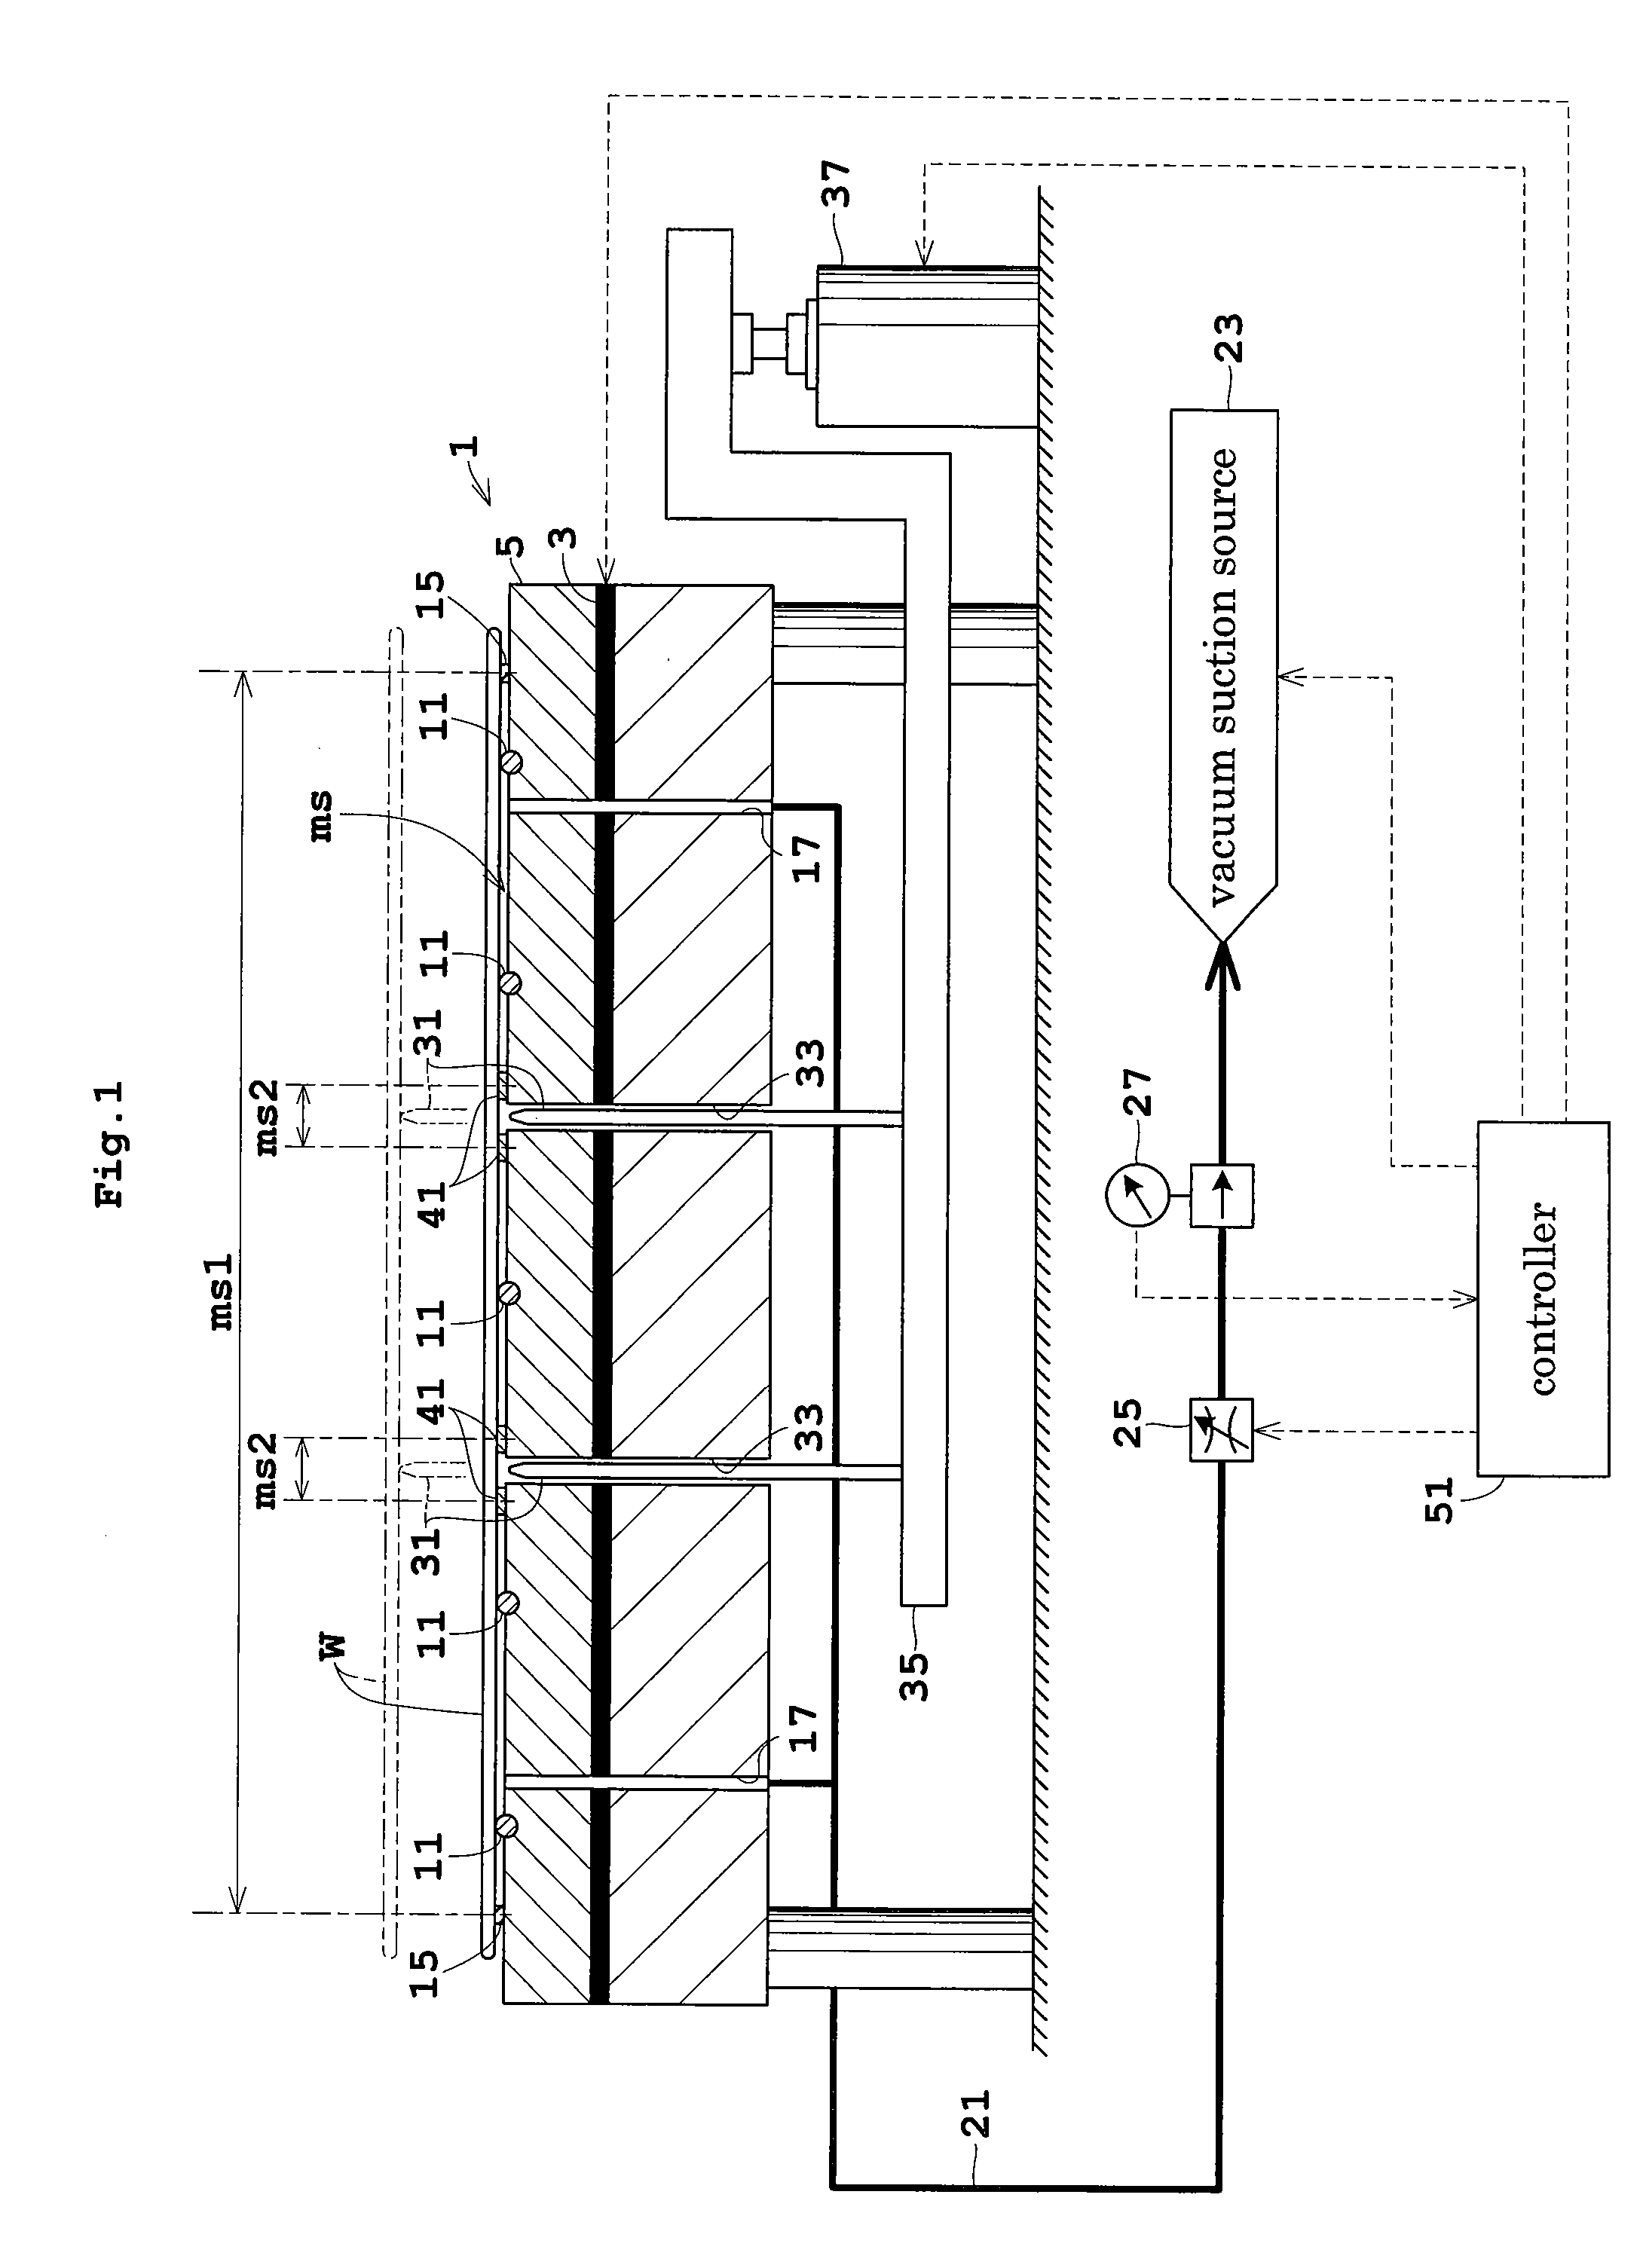 Substrate heat treatment apparatus